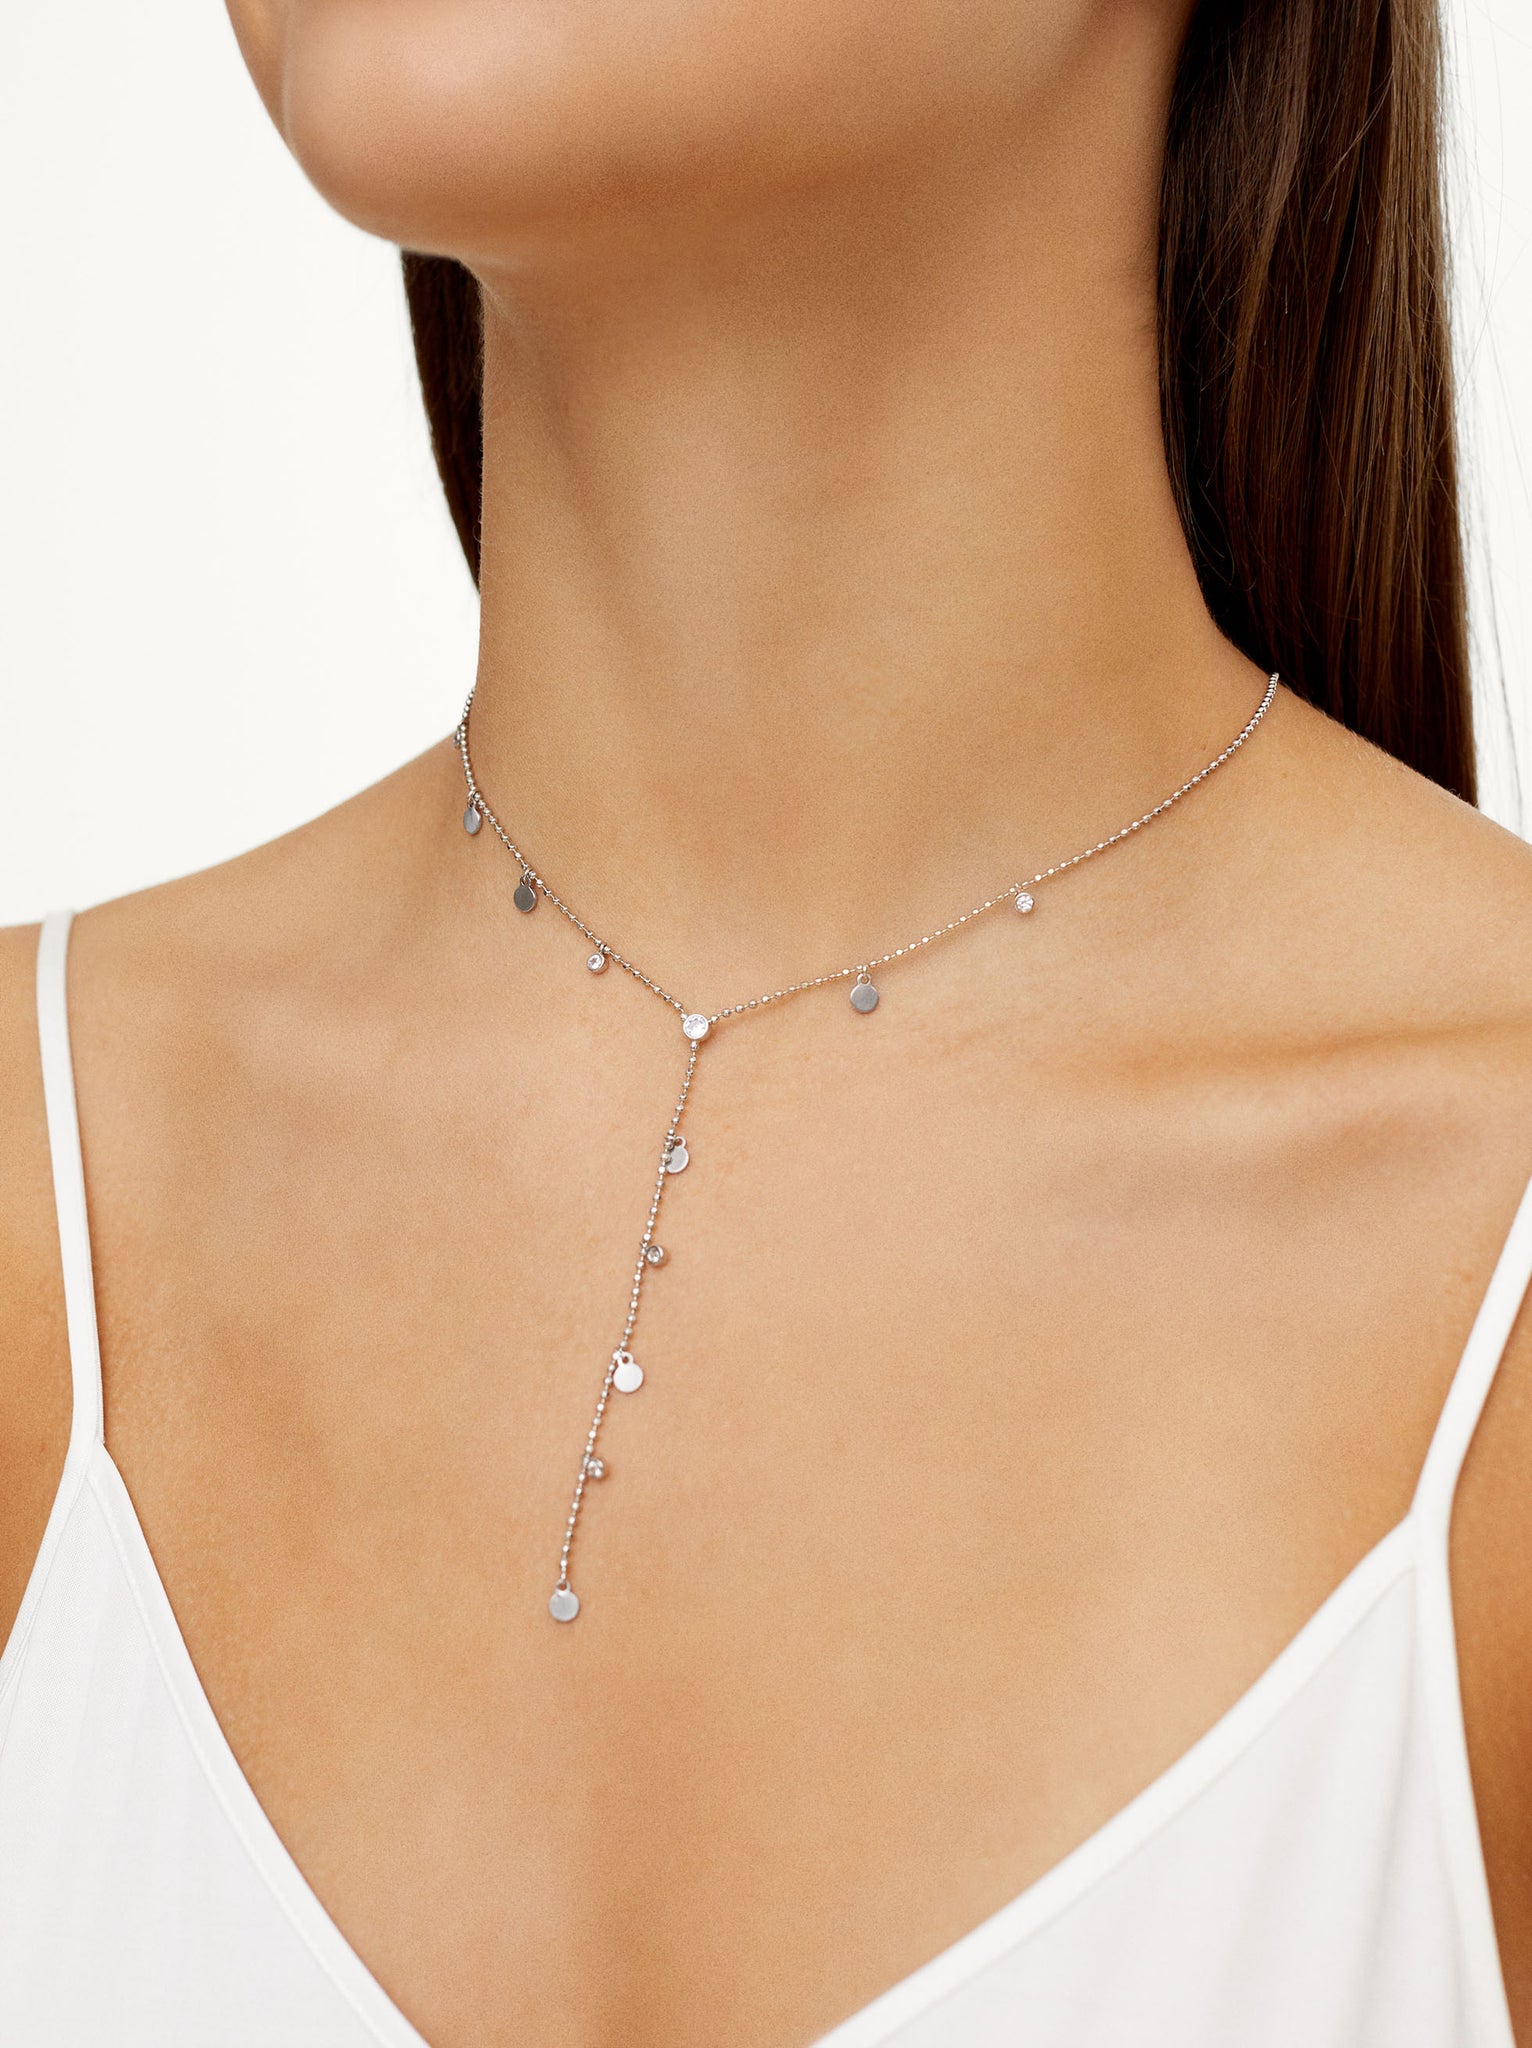 Silver Necklace With Zirconia